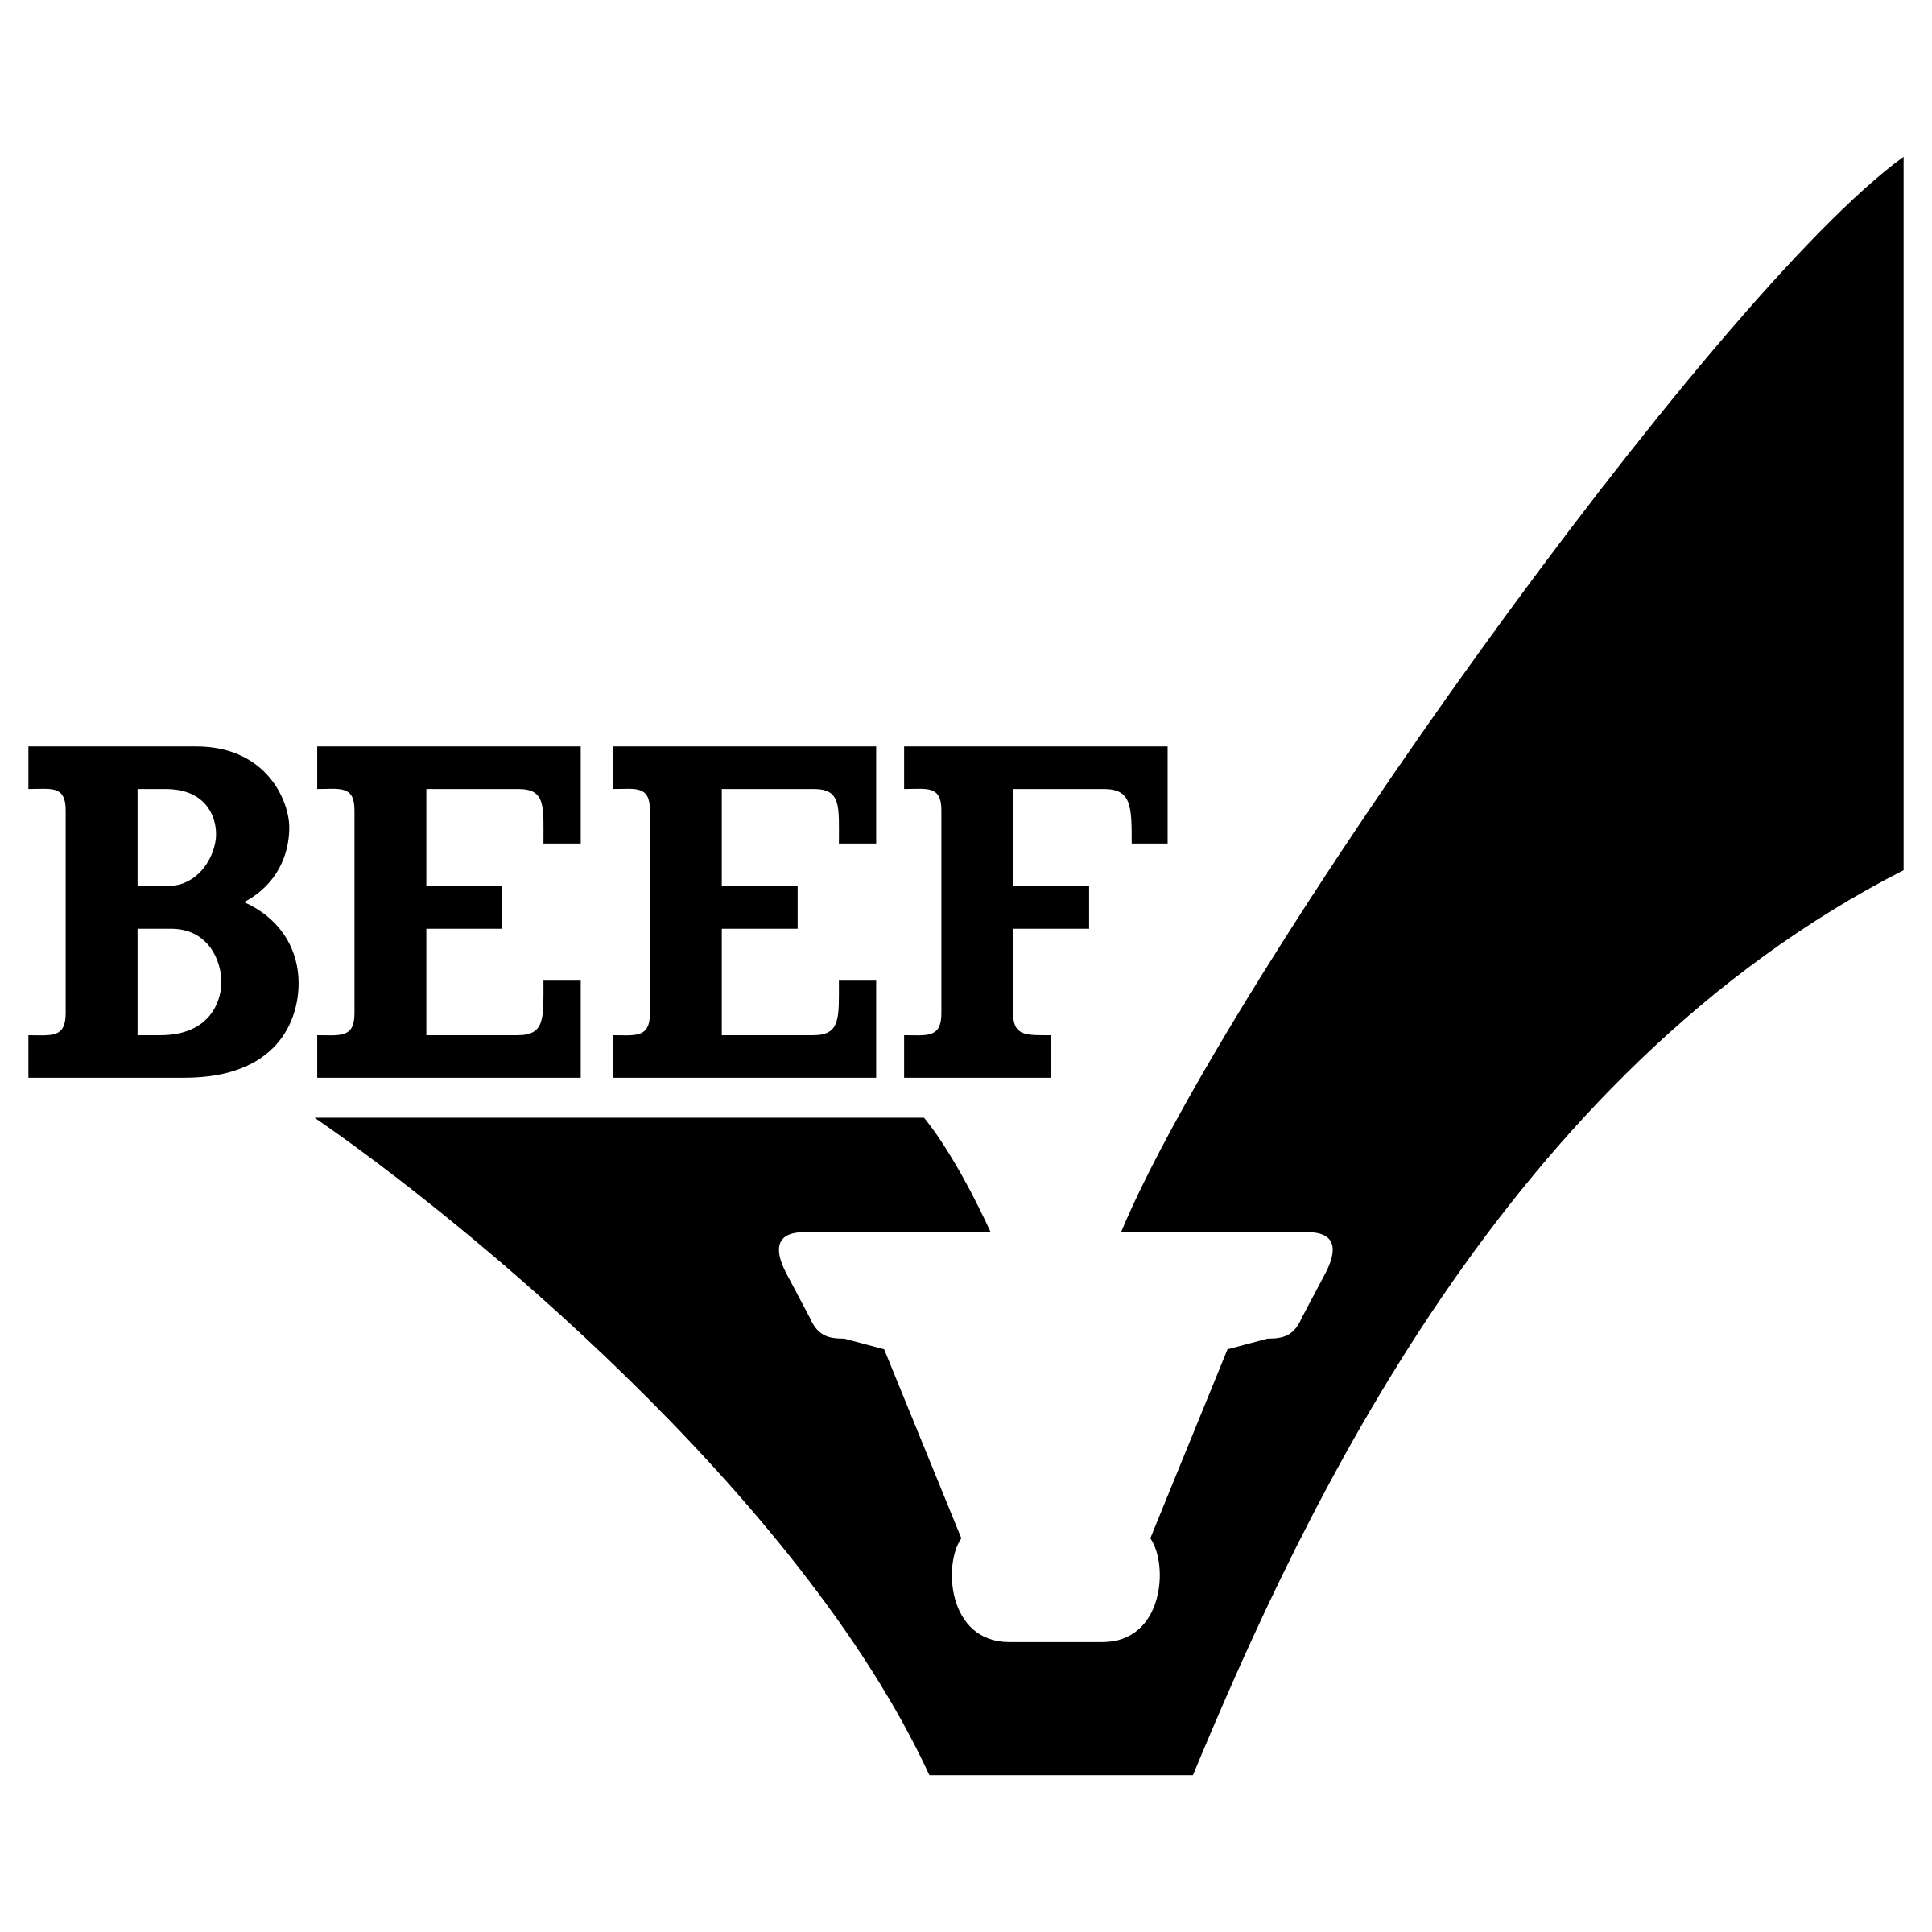 Beef Logo - BEEF Logo PNG Transparent & SVG Vector - Freebie Supply